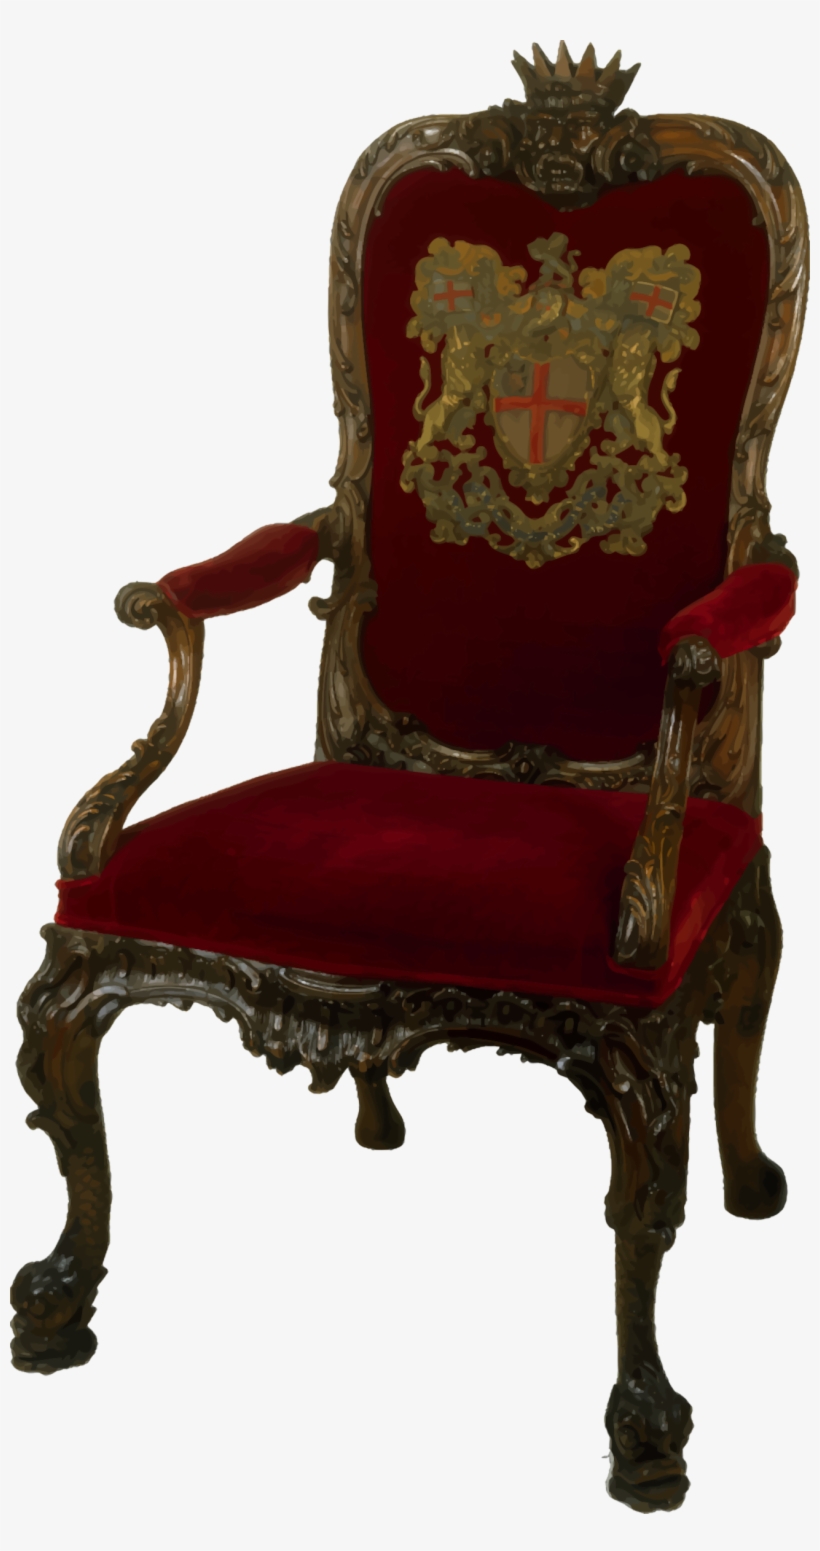 Big Image - Ornate Chair, transparent png #1674036